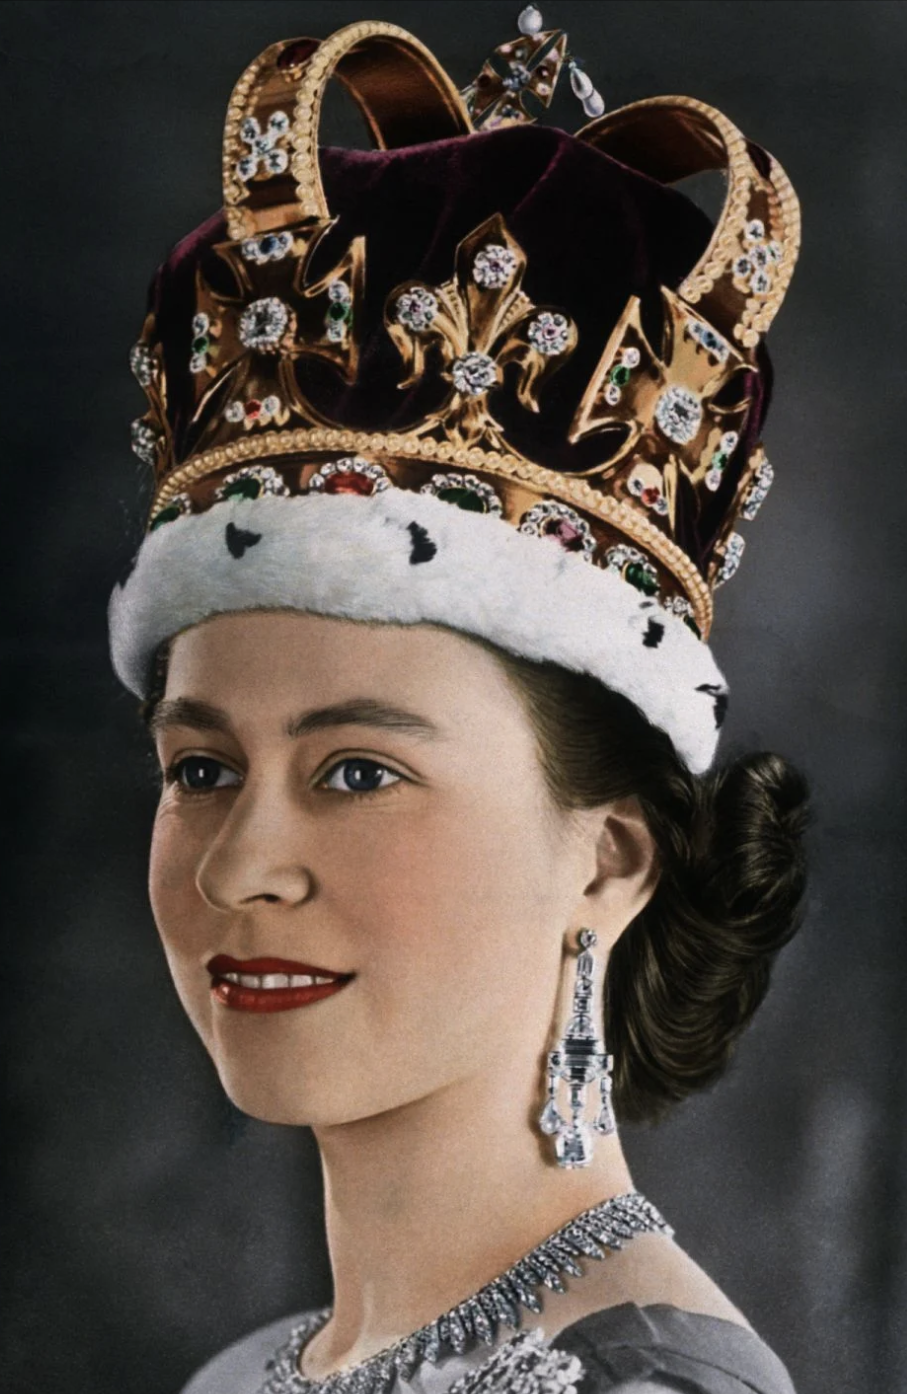 Queen Elizabeth with Crown